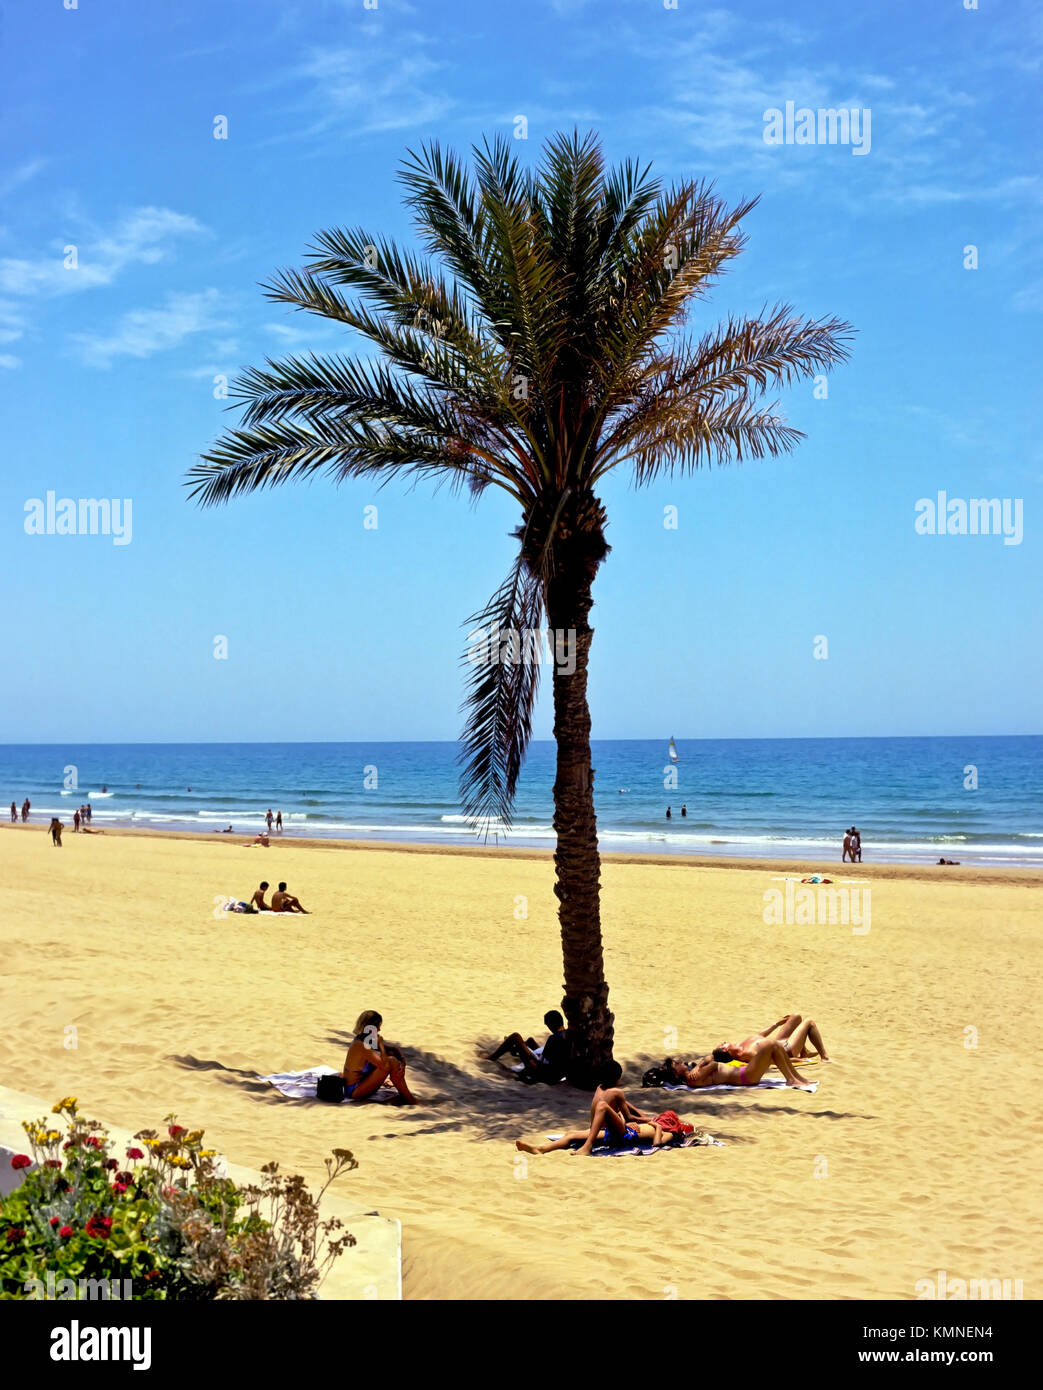 Agadir beach fotografías e imágenes de alta resolución - Página 16 - Alamy